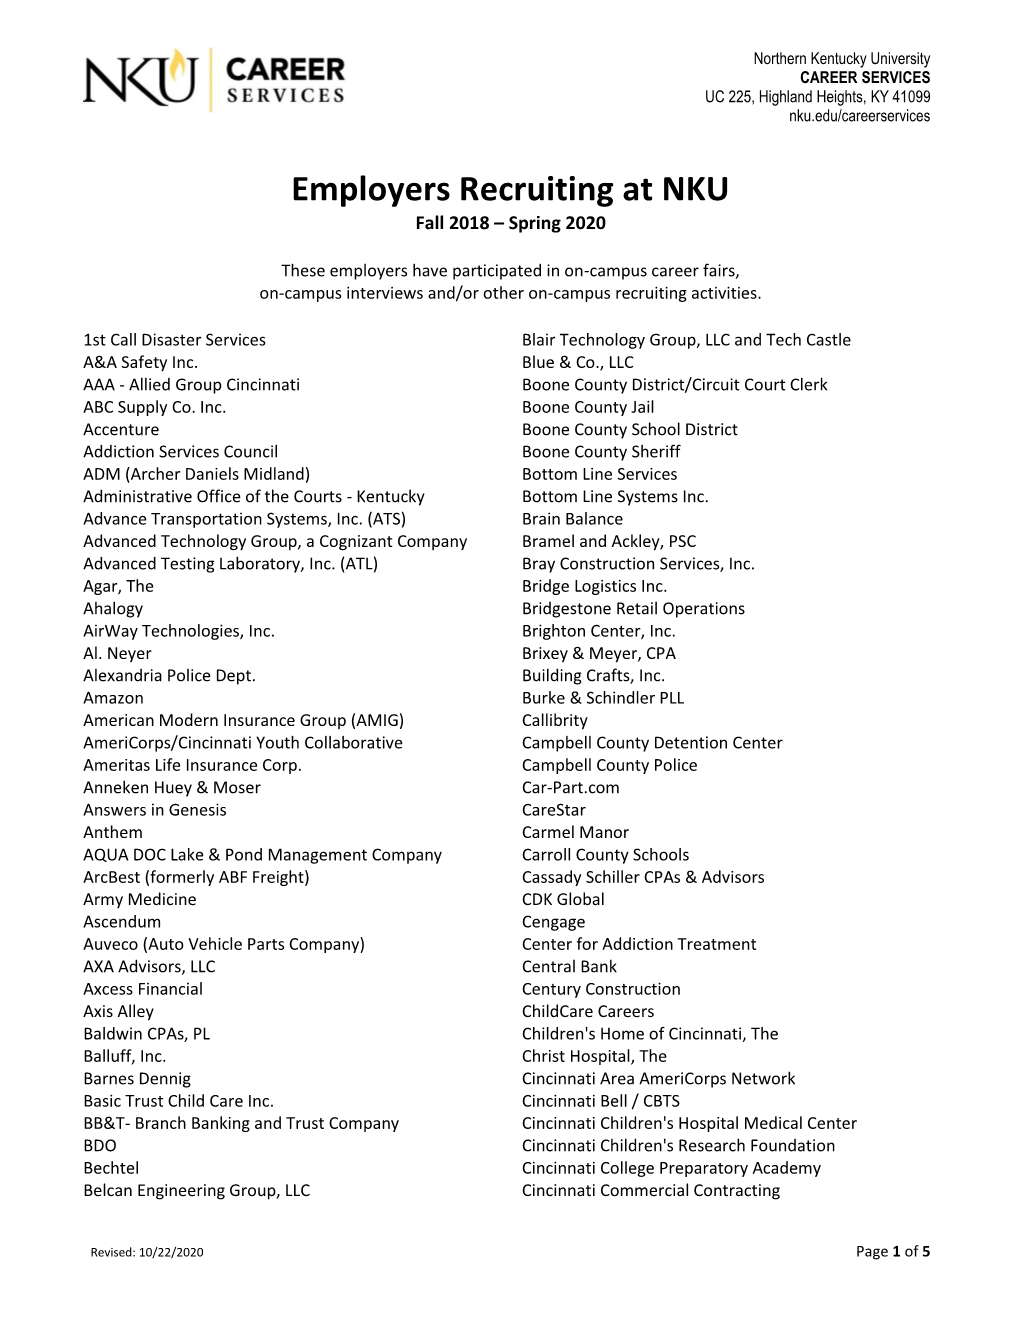 Employers Recruiting at NKU Fall18-Spring20